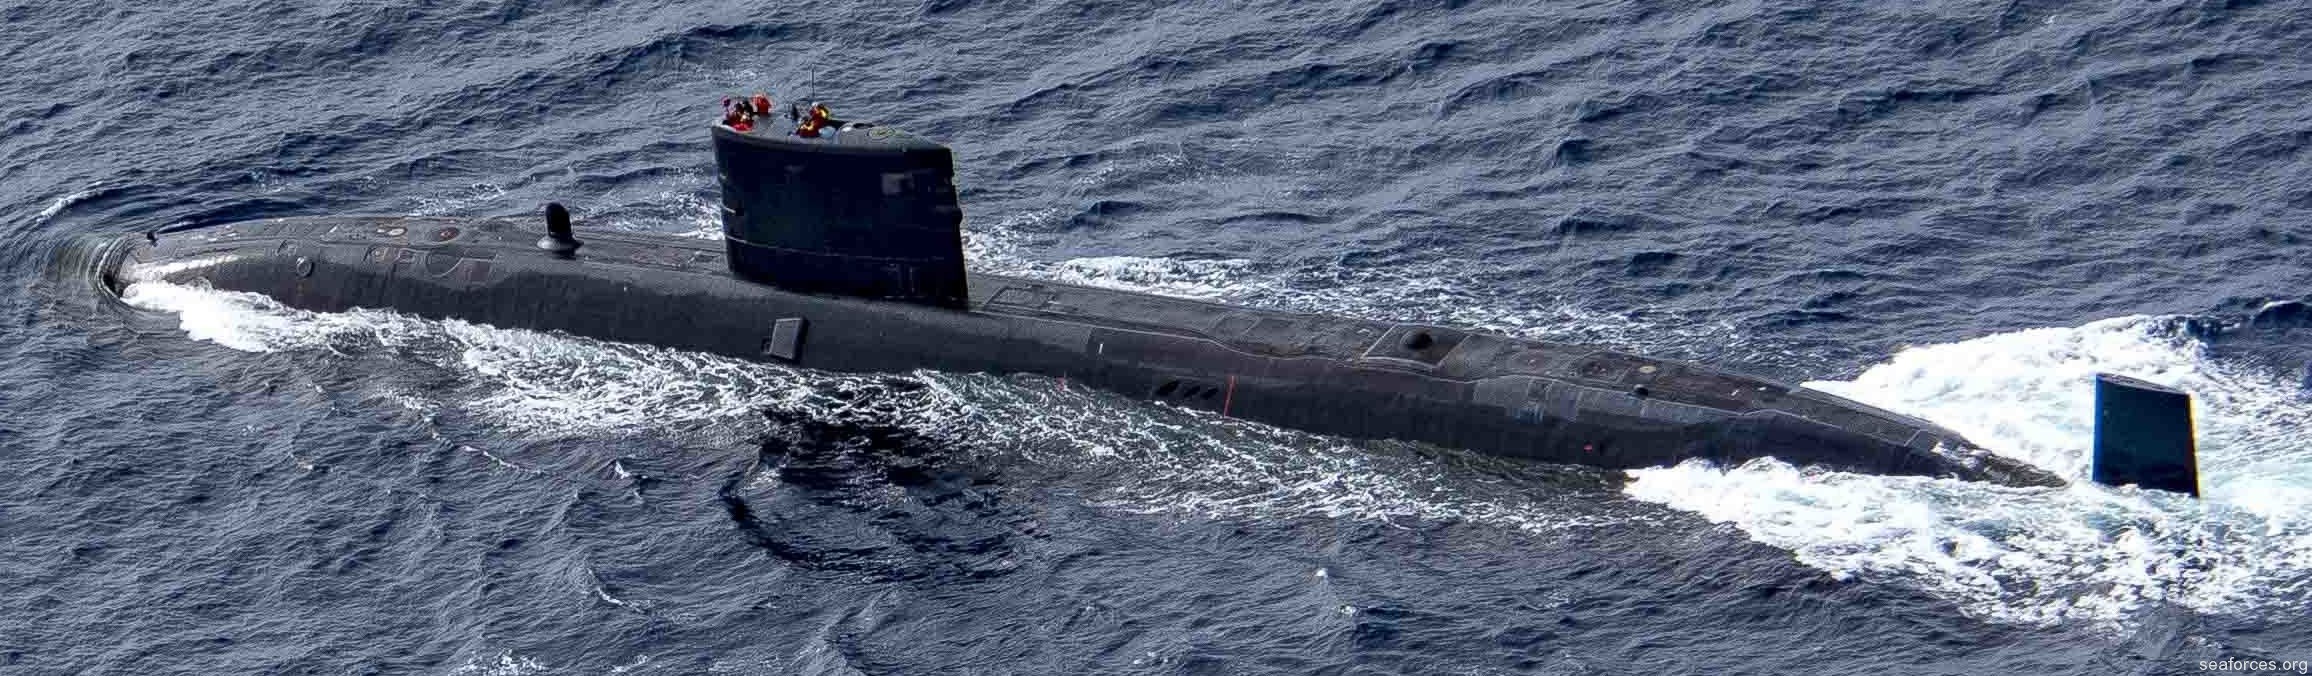 s91 hms trenchant trafalgar class attack submarine hunter killer royal navy 05